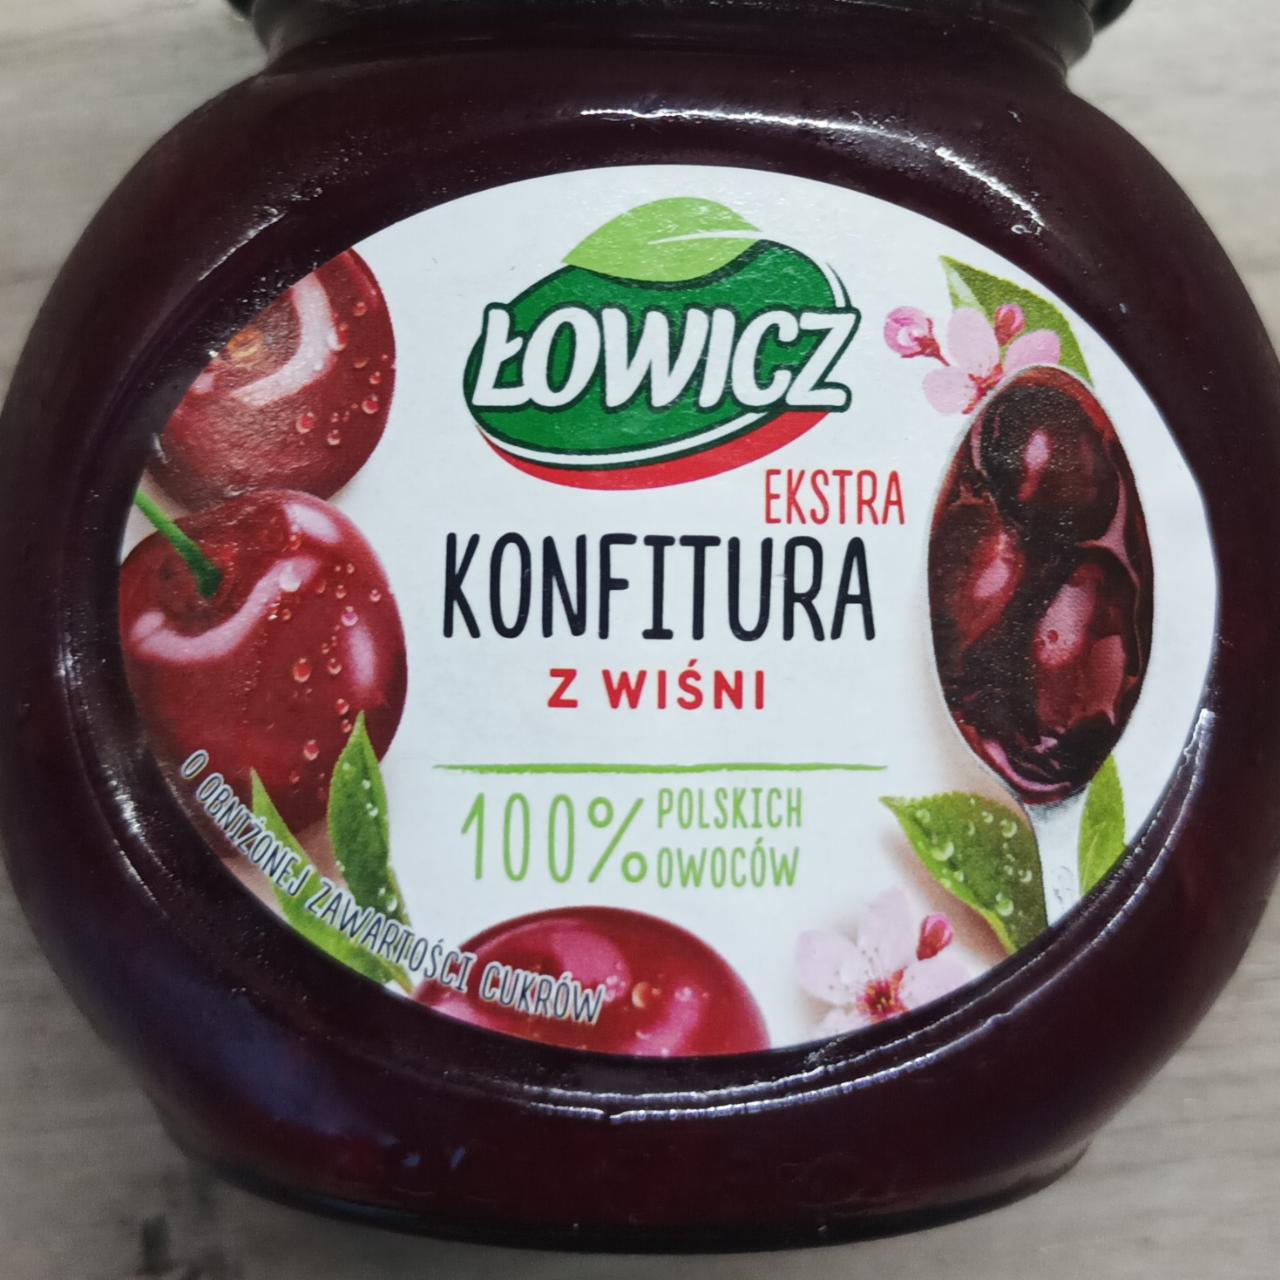 Фото - Варенье вишневое с низким содержанием сахара Konfitura Łowicz